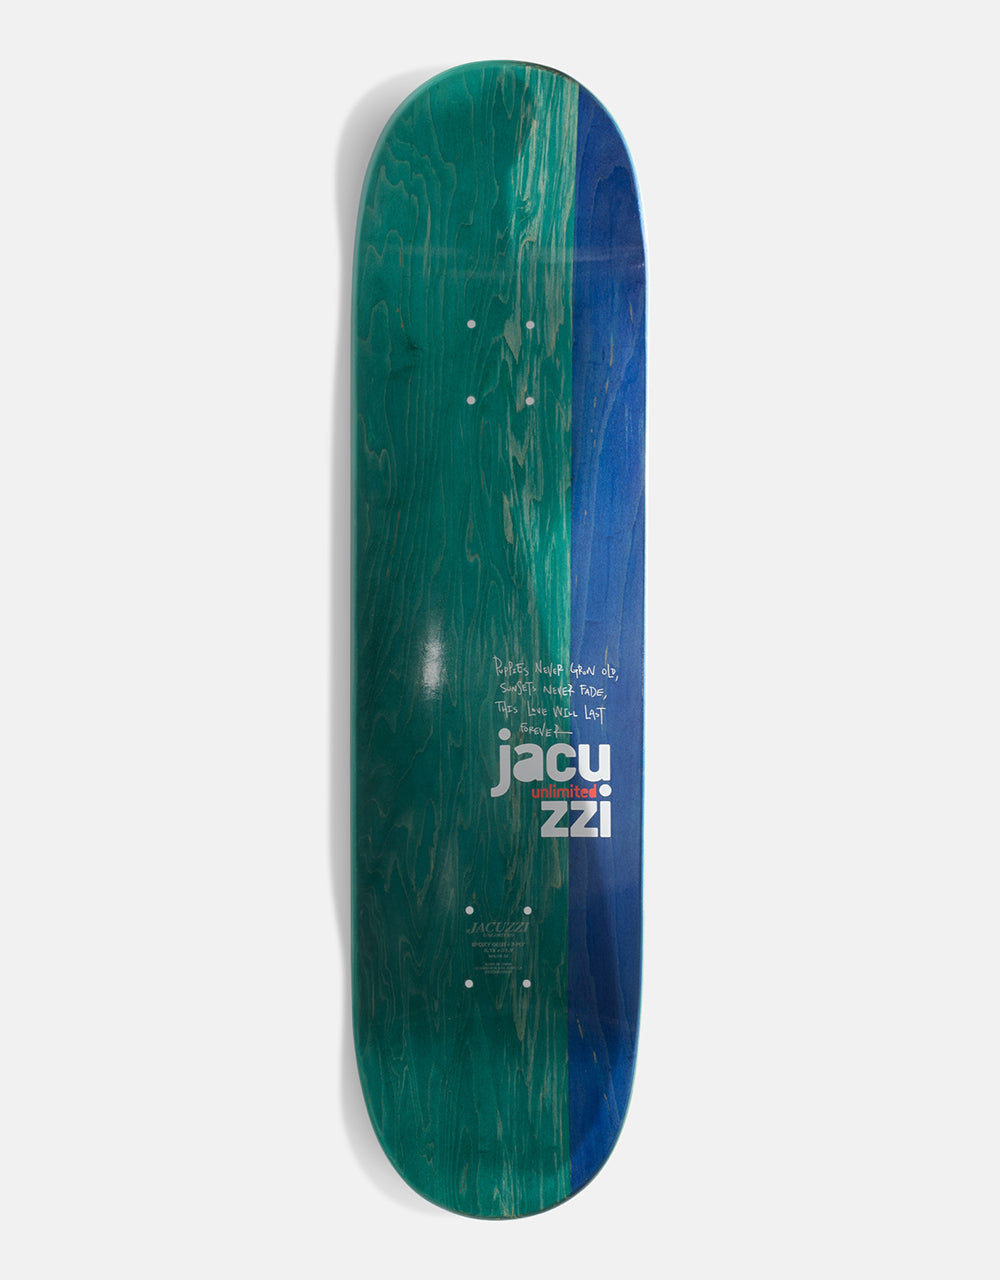 Jacuzzi Unlimited Fetch EX7 Skateboard Deck - 8.25"